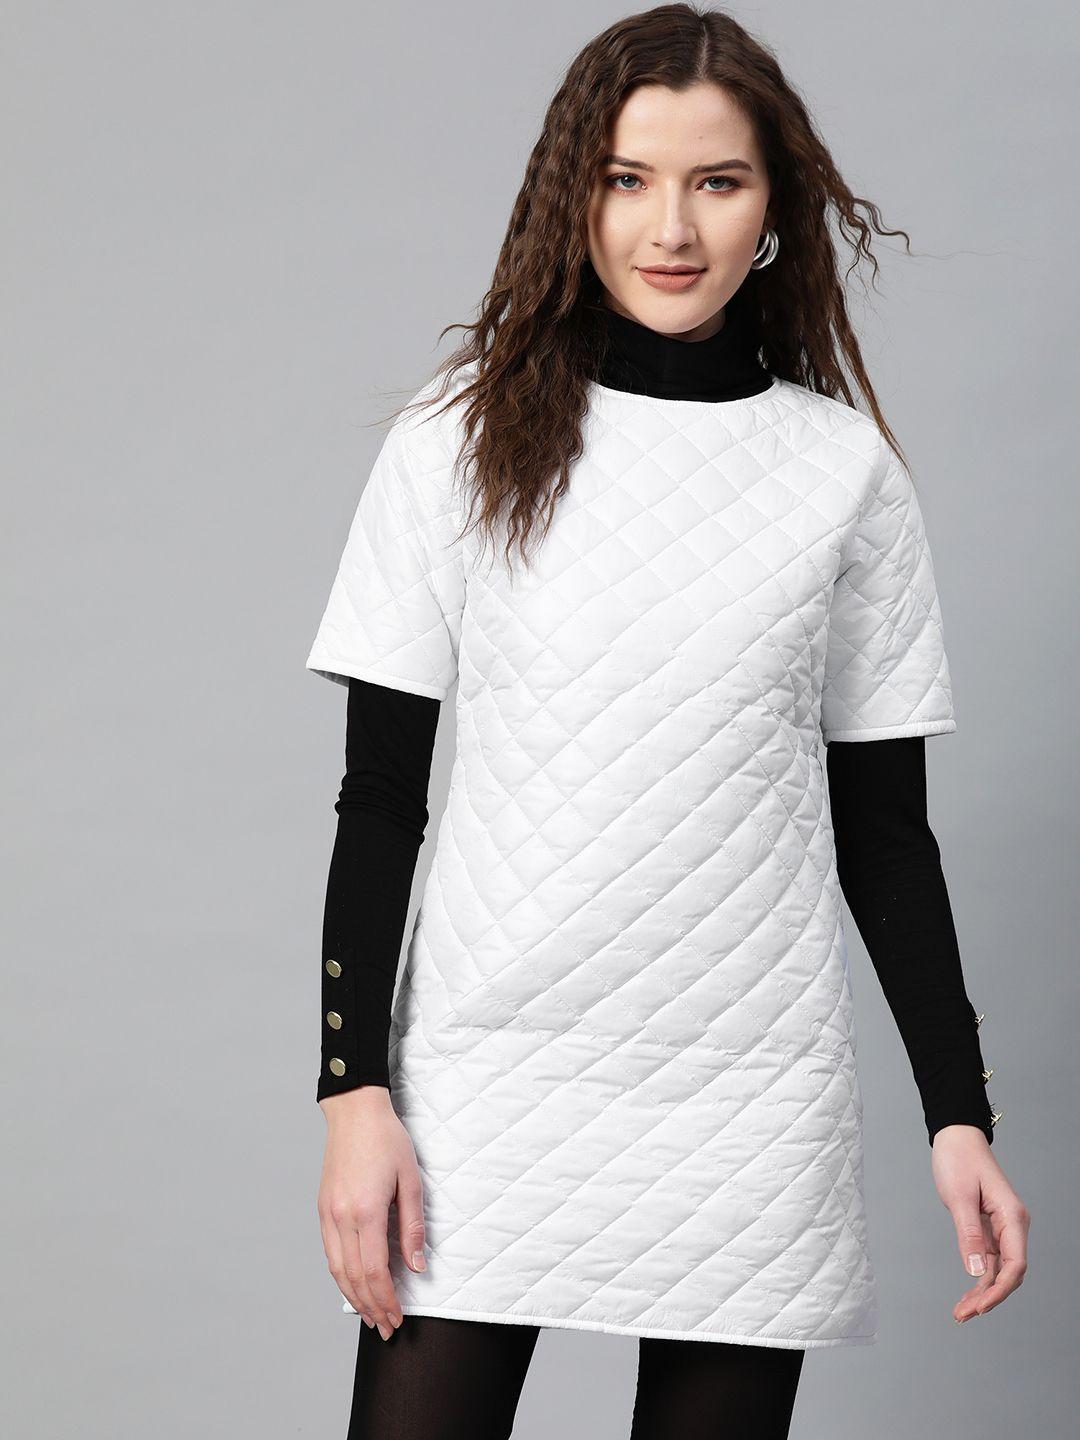 sassafras women white quilted shift dress